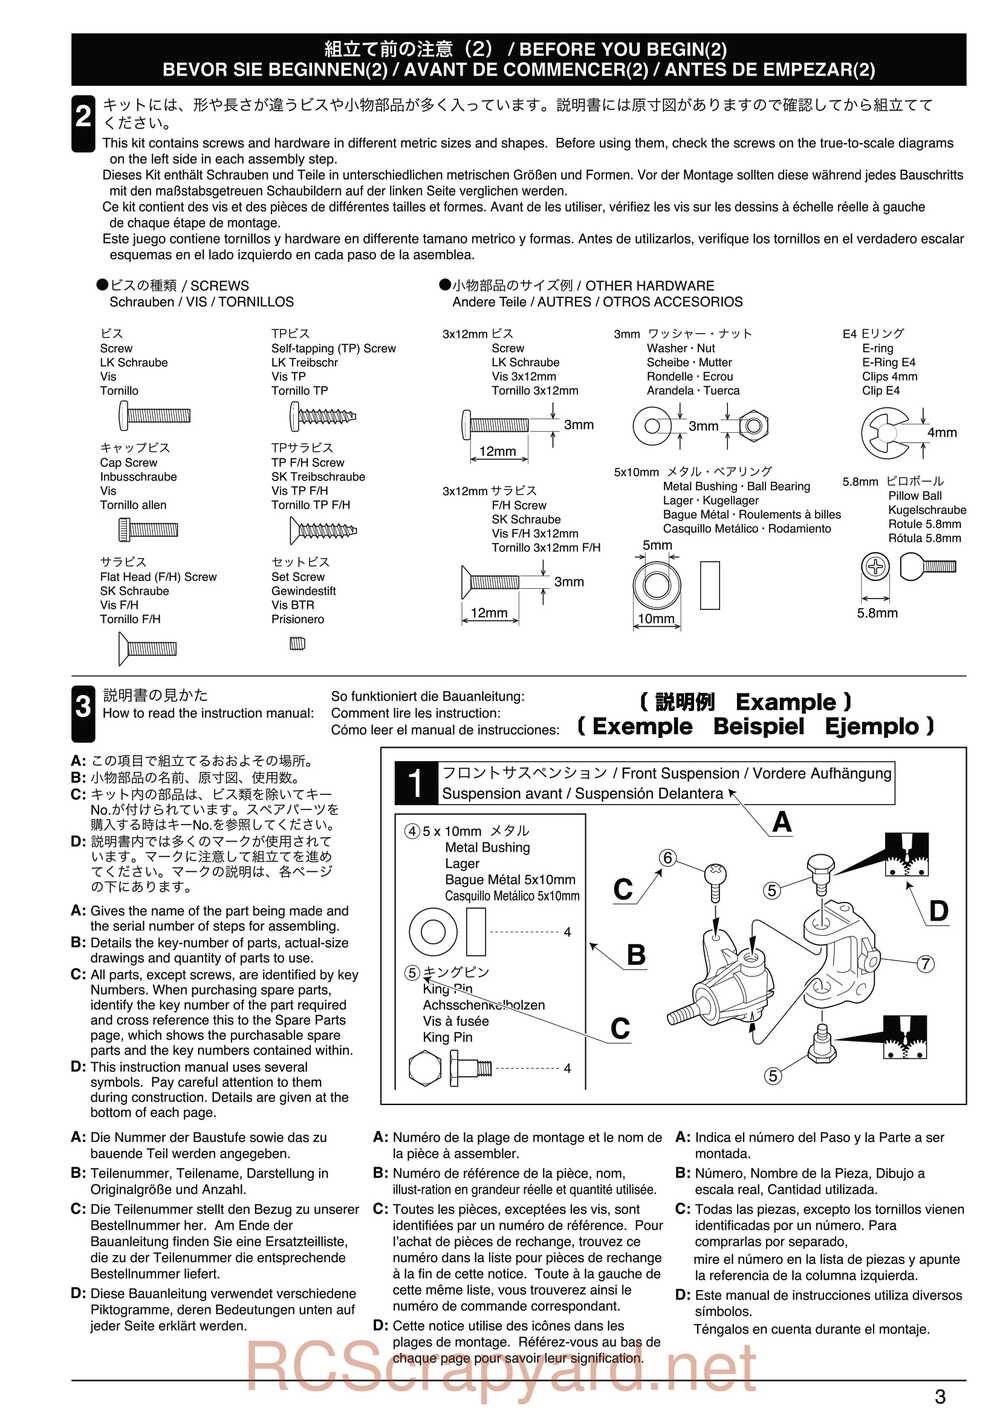 Kyosho - 30992 - EP Fazer Rage VE - Manual - Page 03